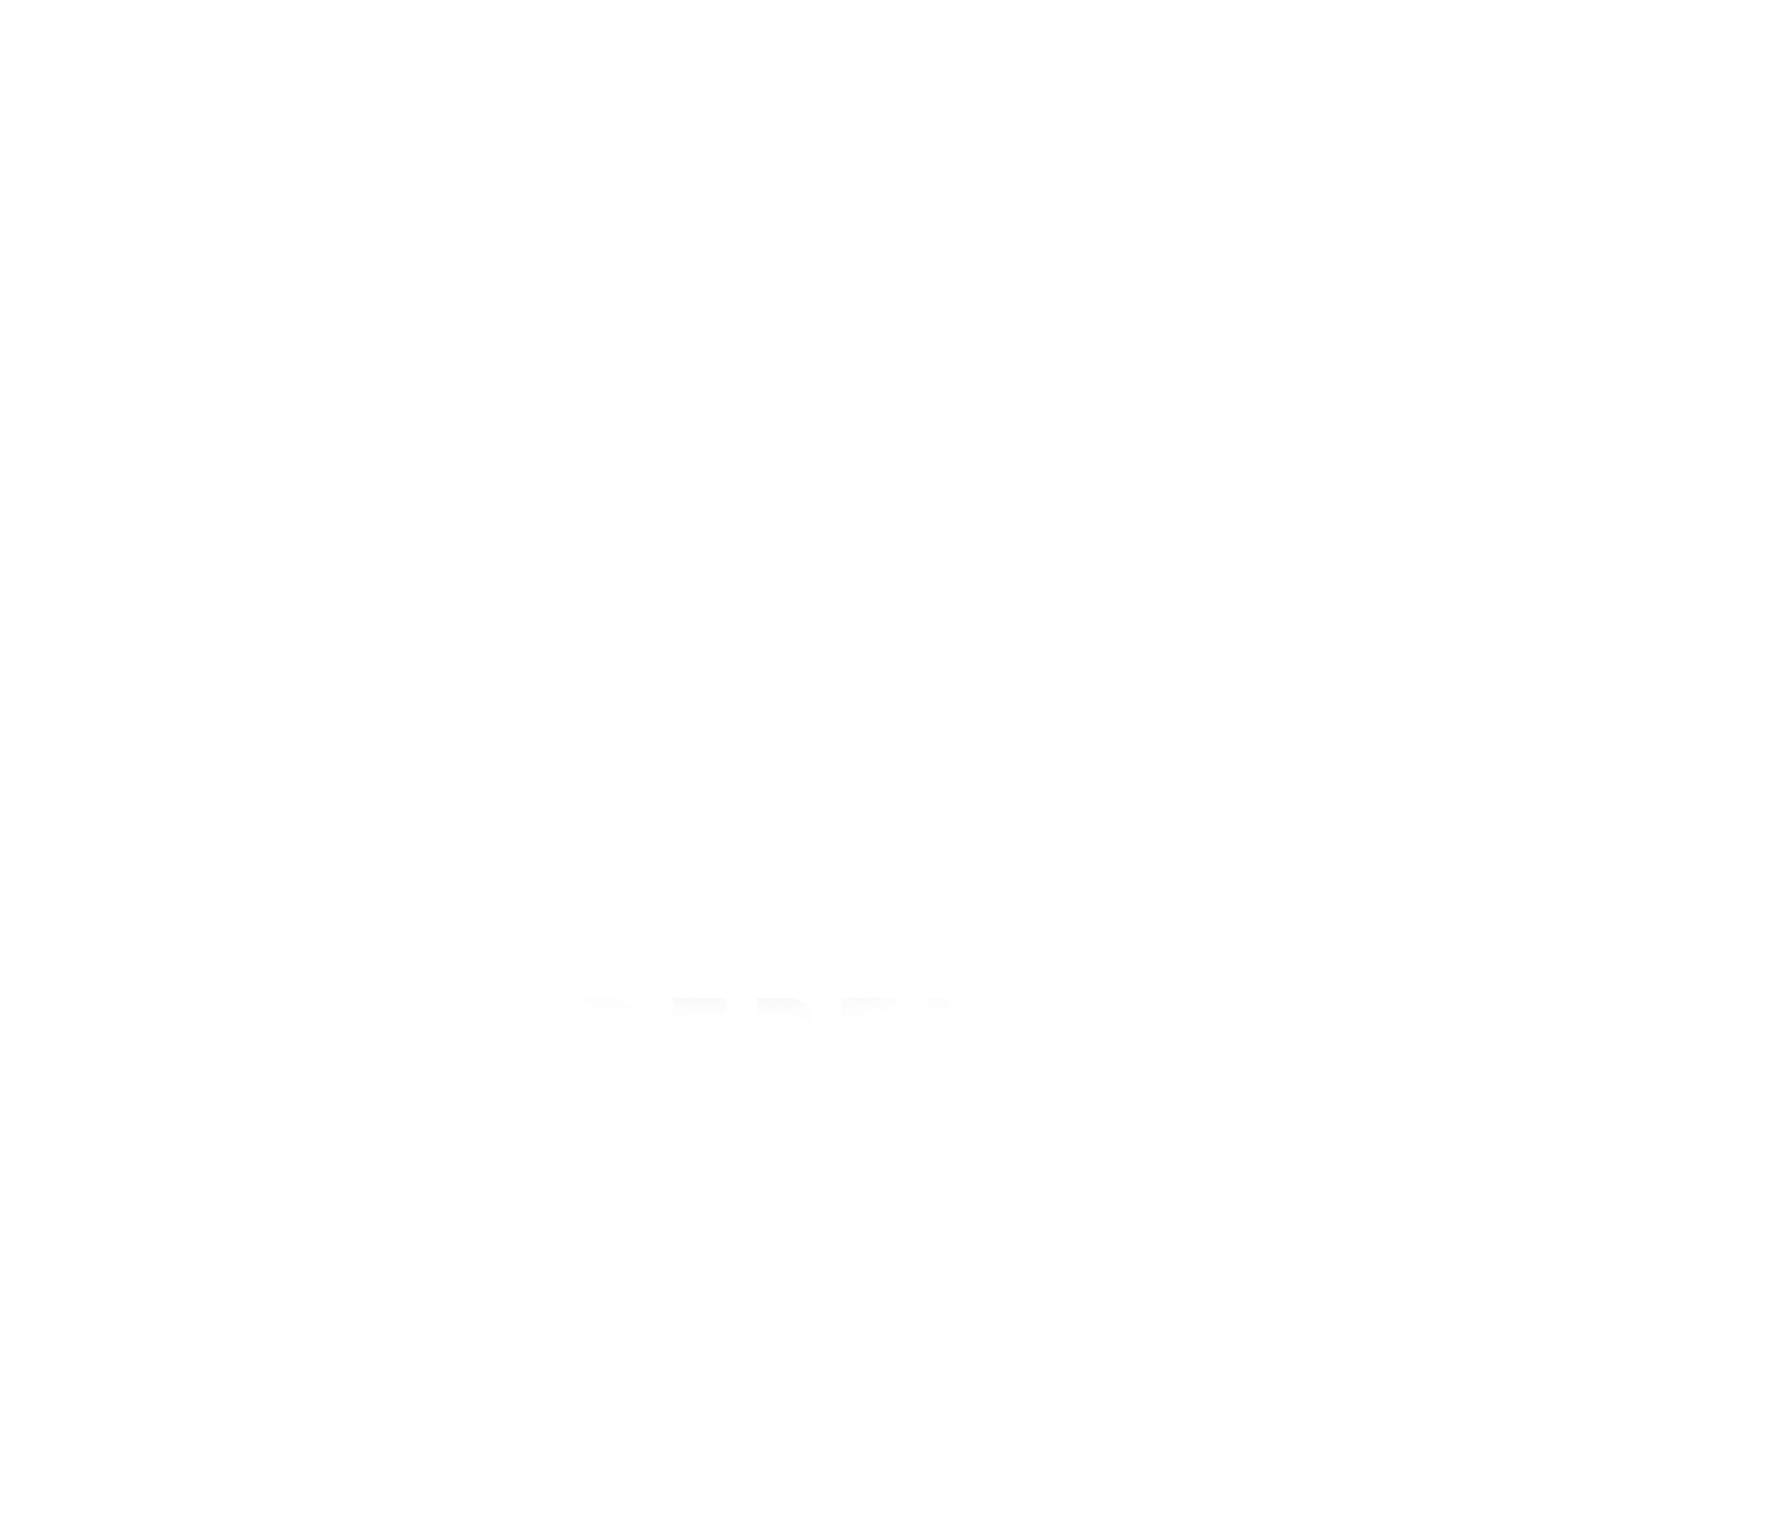 Estrella Galicia logo - A Partner of London Restaurant Festival